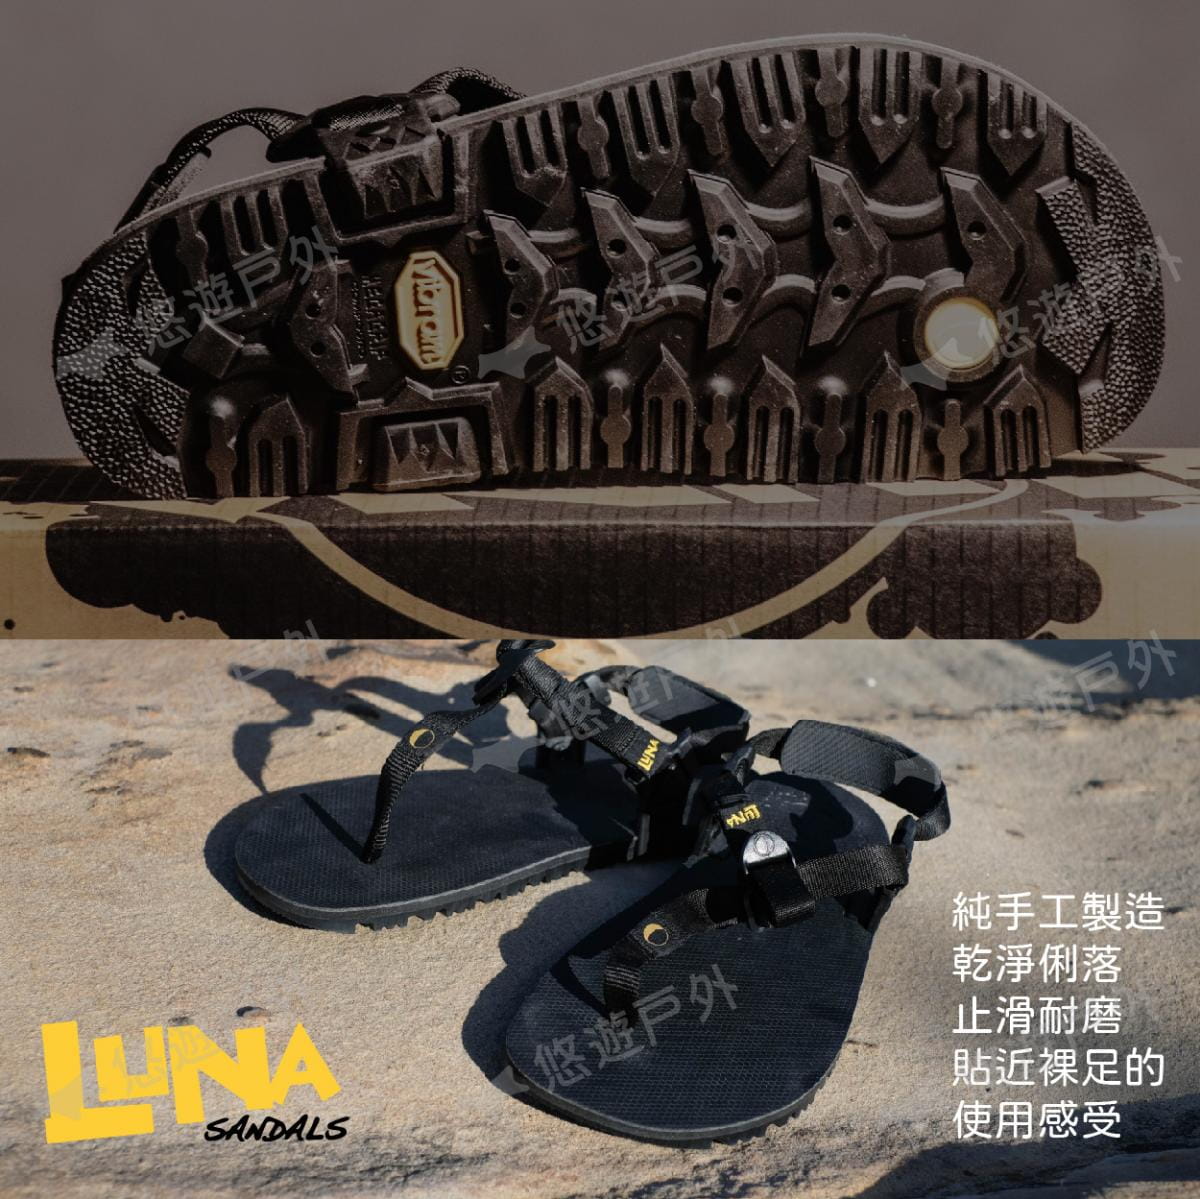 【Luna Sandals】Oso Flaco Winged 涼鞋 7mm款 悠遊戶外 2